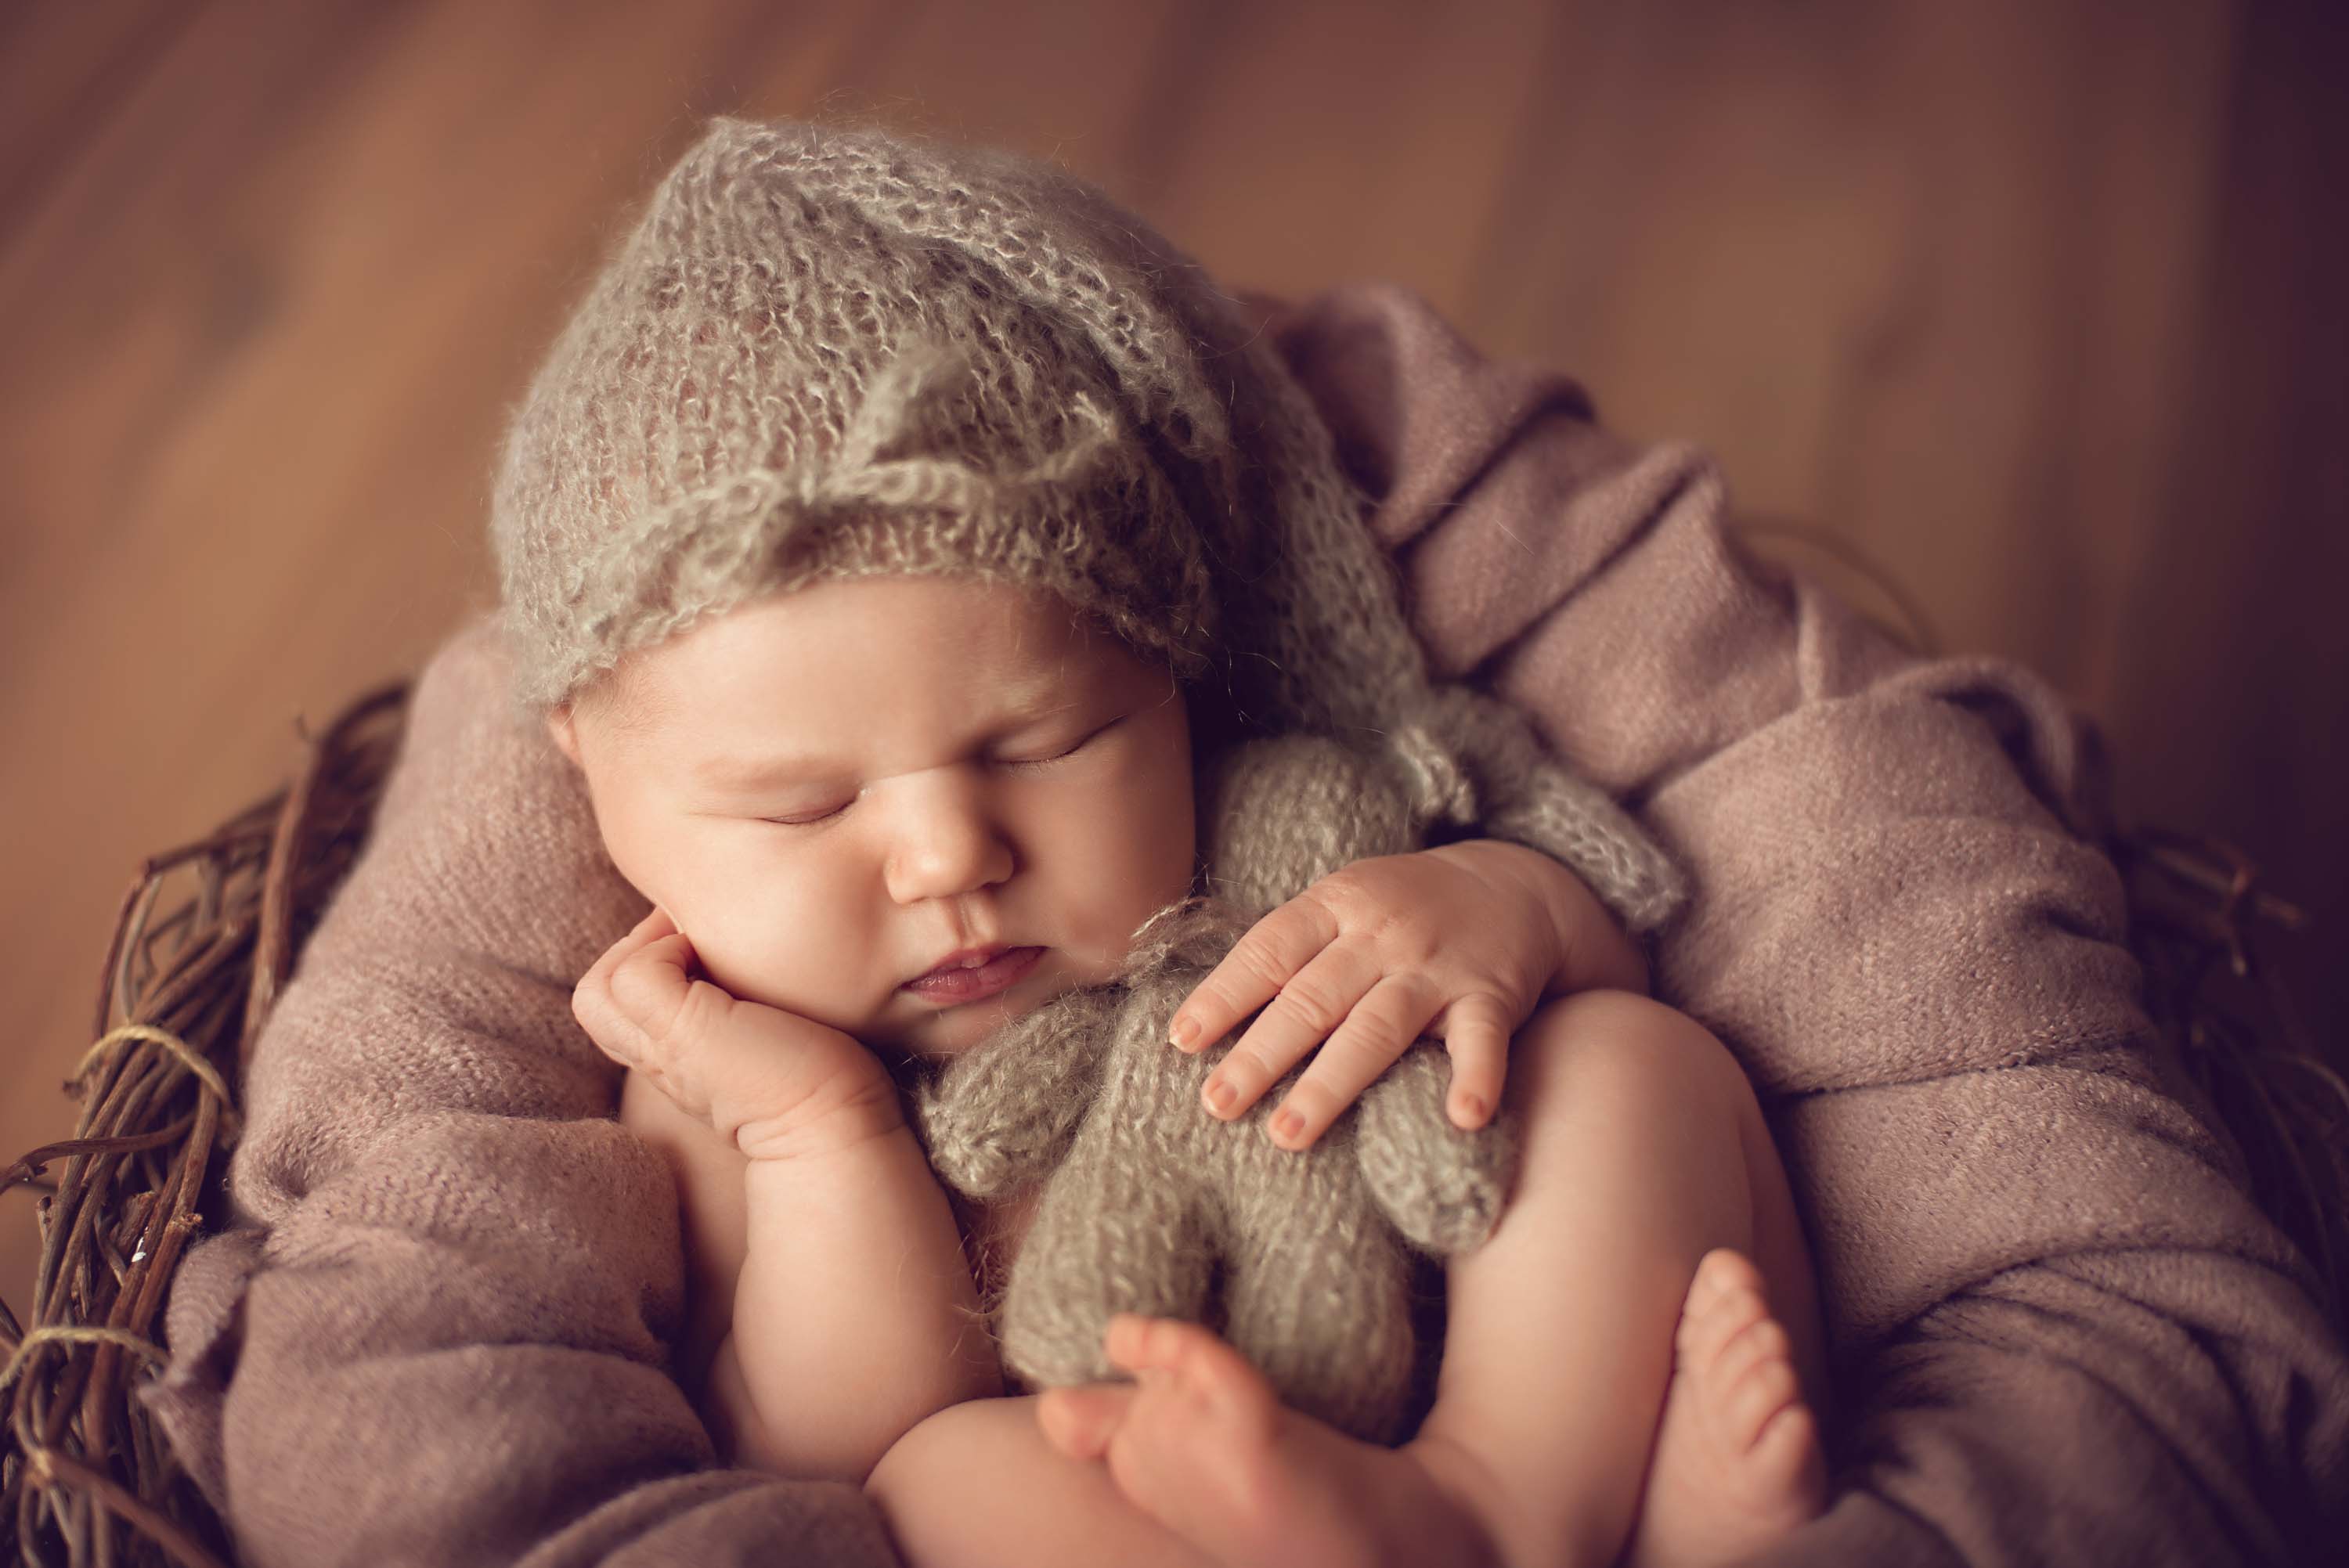 Week old baby wearing sleeping cap and cuddling a teddy in a basket